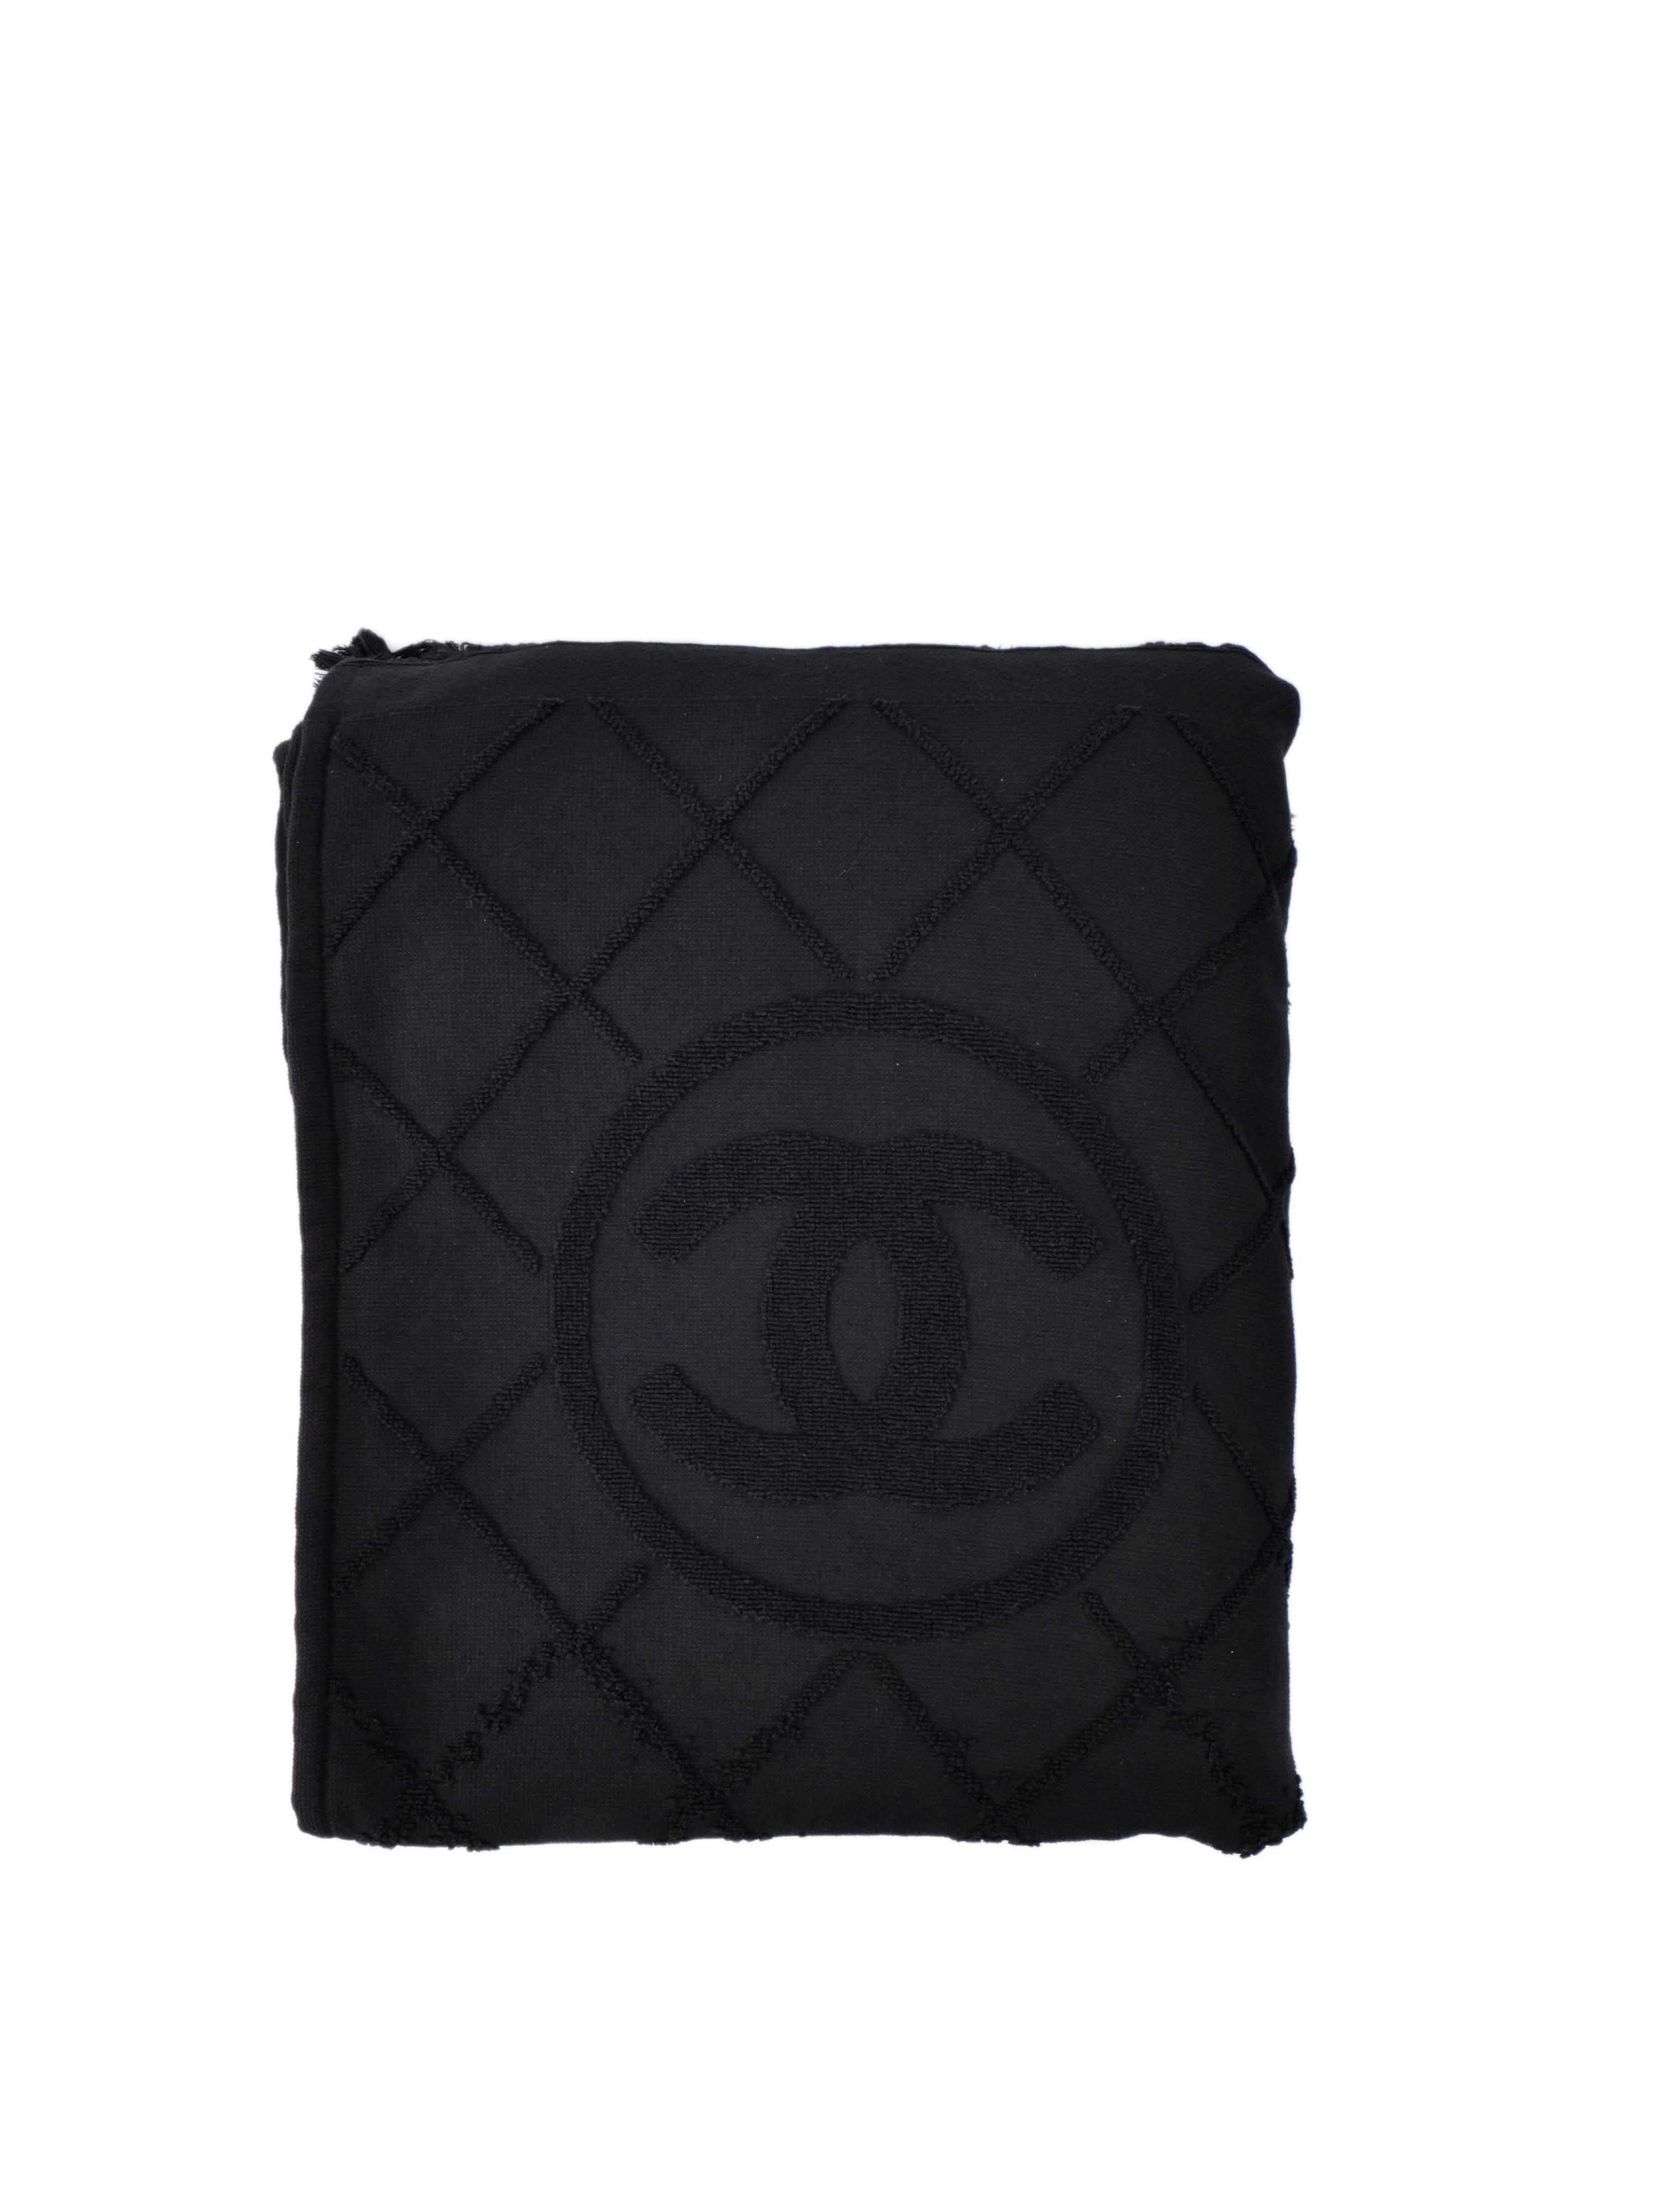 Chanel Black Beach Towel.